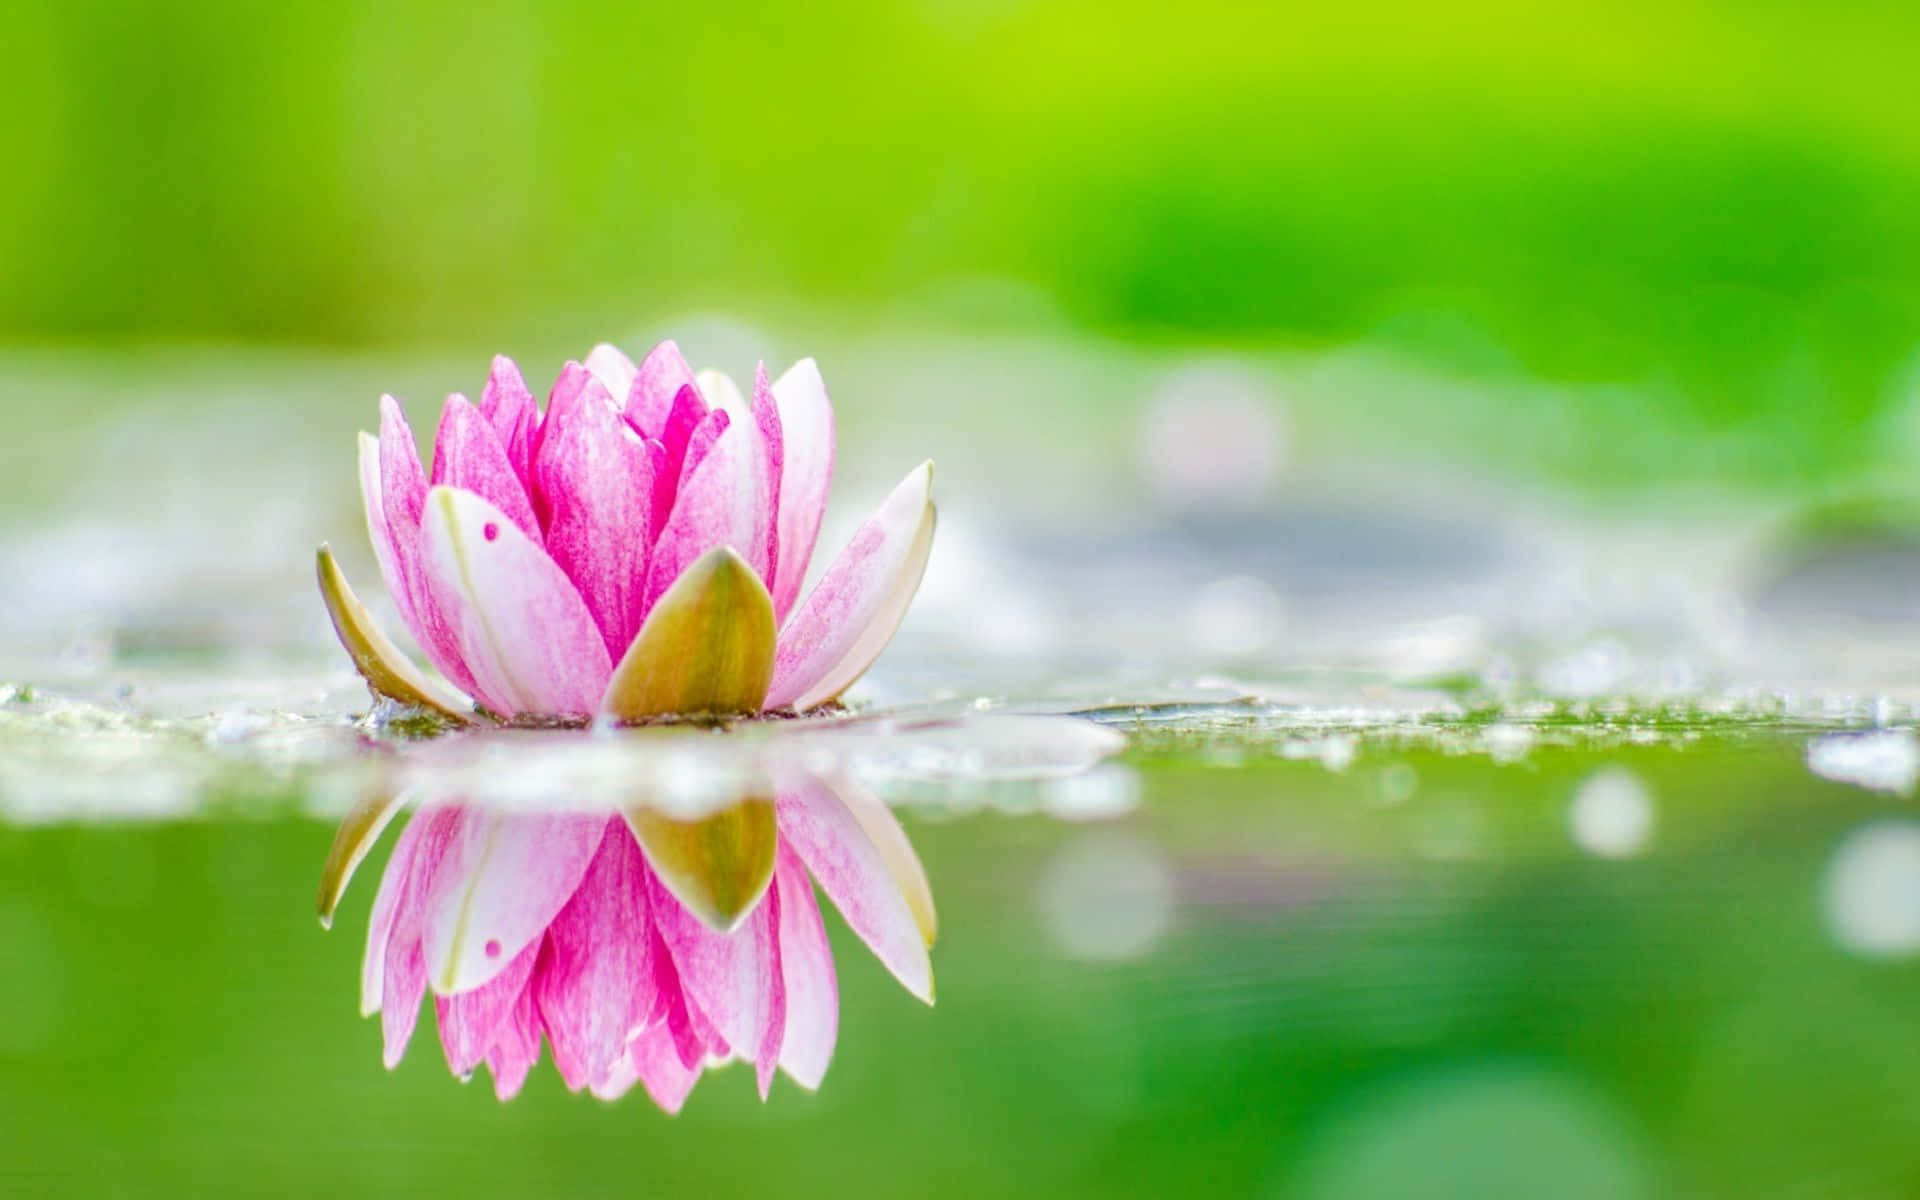 A beautiful lotus resting on a serene lake